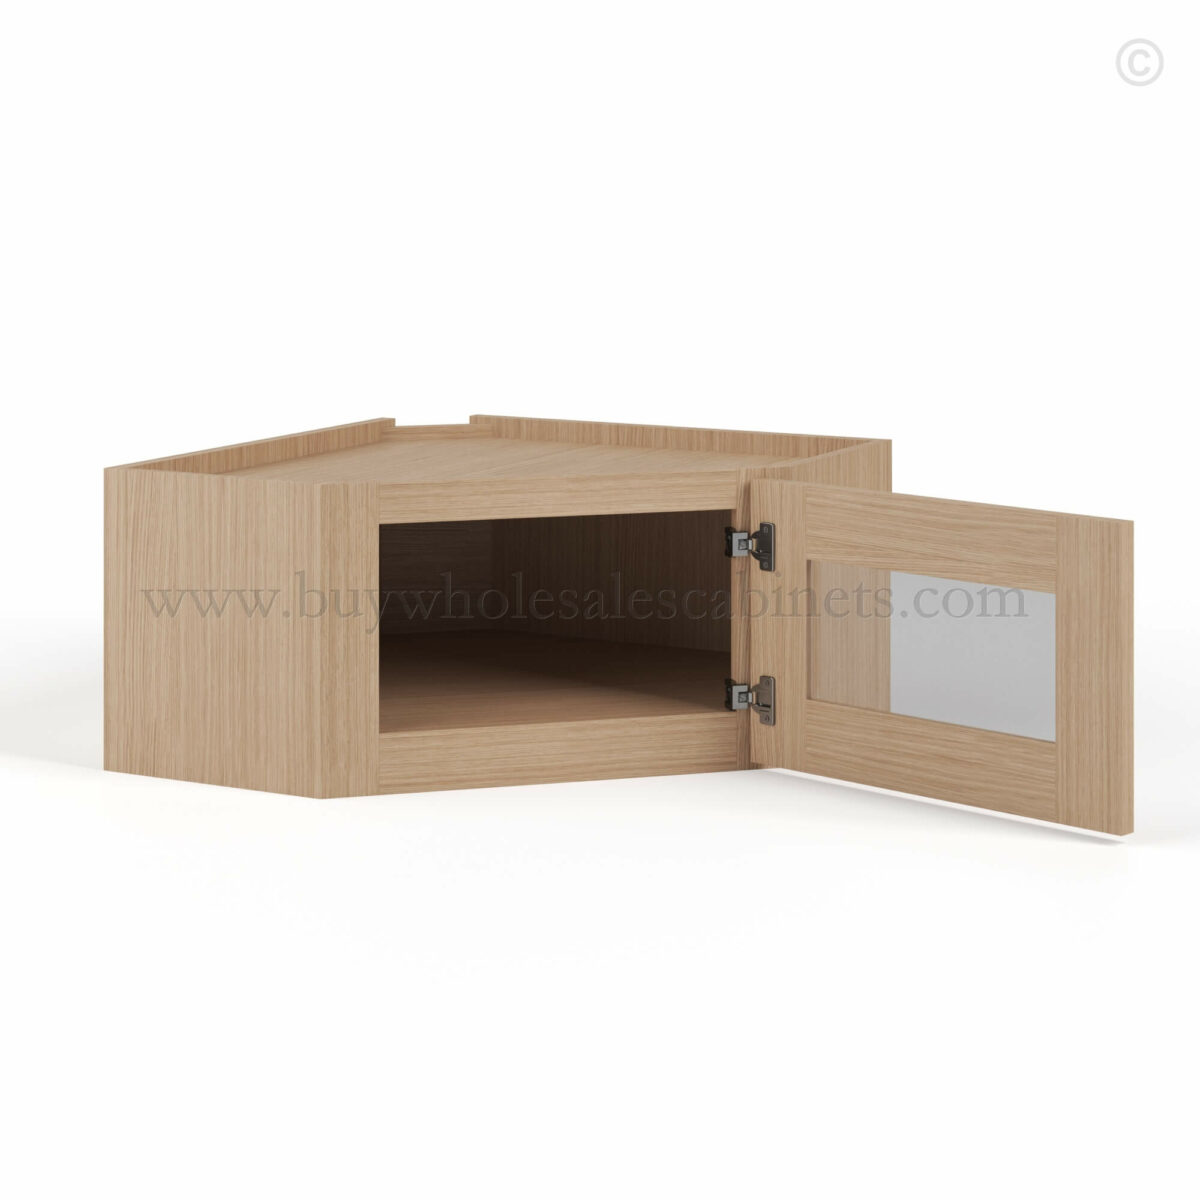 Slim Oak Shaker Diagonal Corner Wall Shelf with Glass Door, rta cabinets, wholesale cabinets